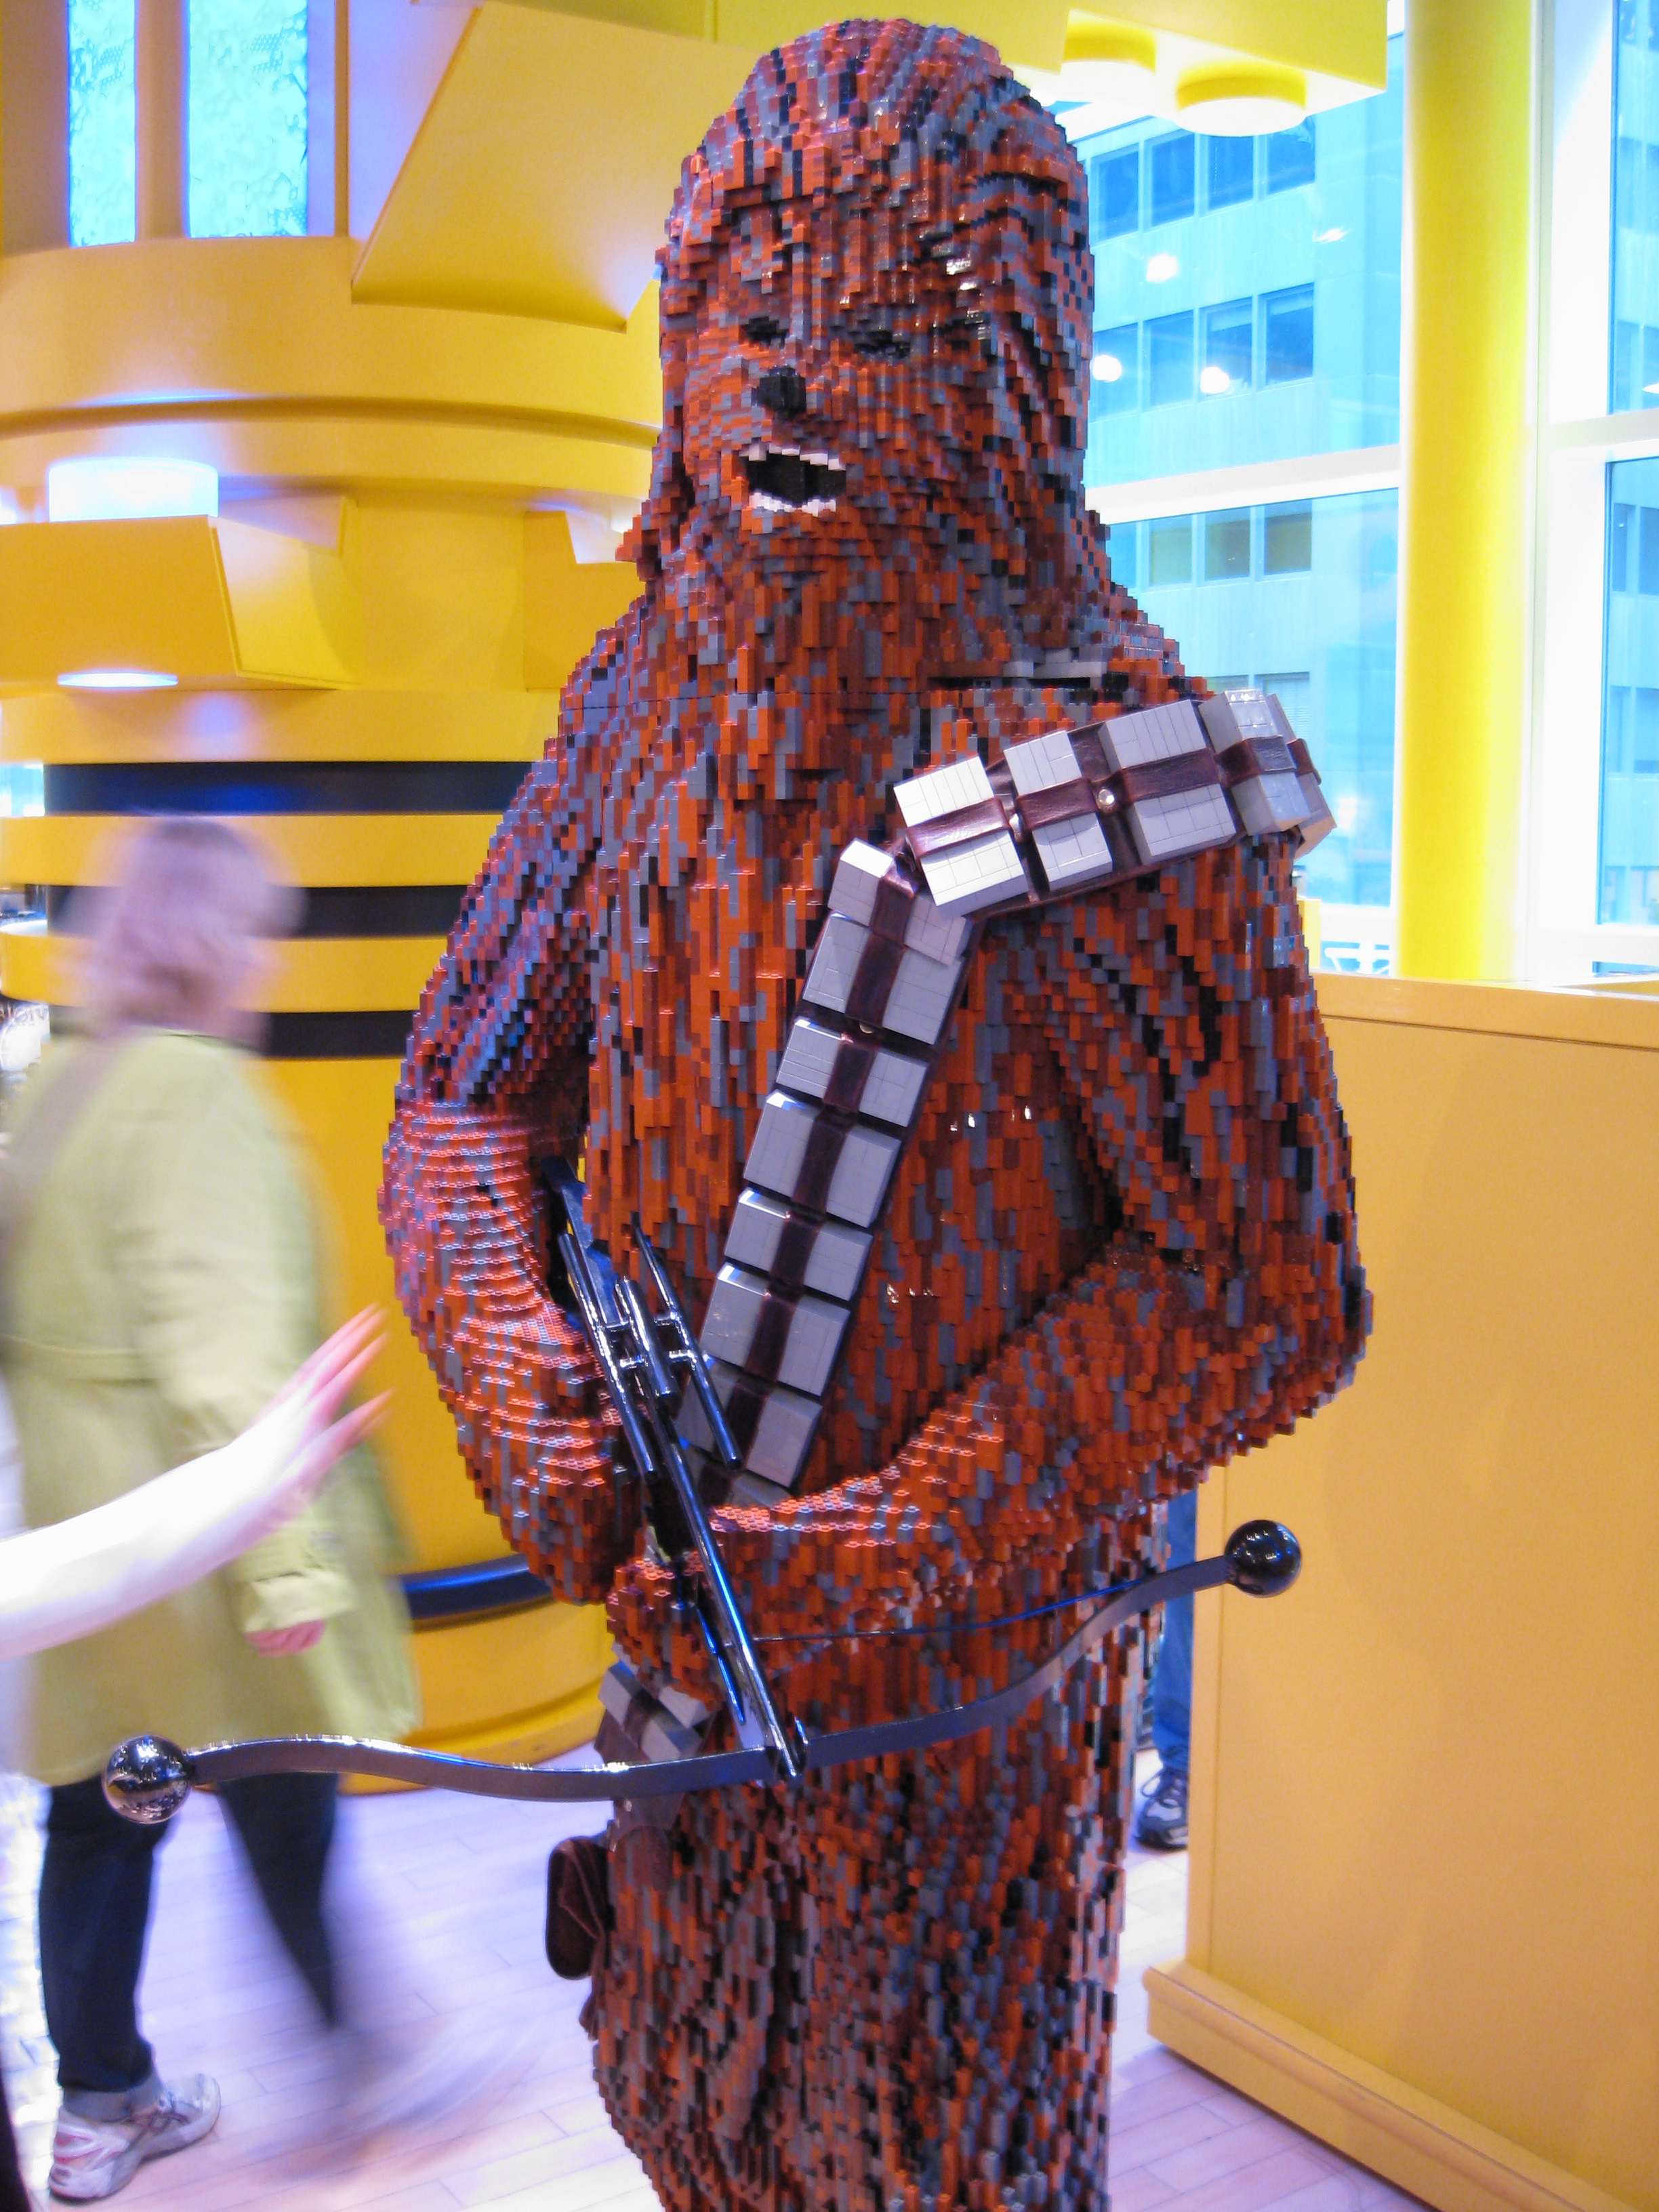 LEGO-Chewbacca!!